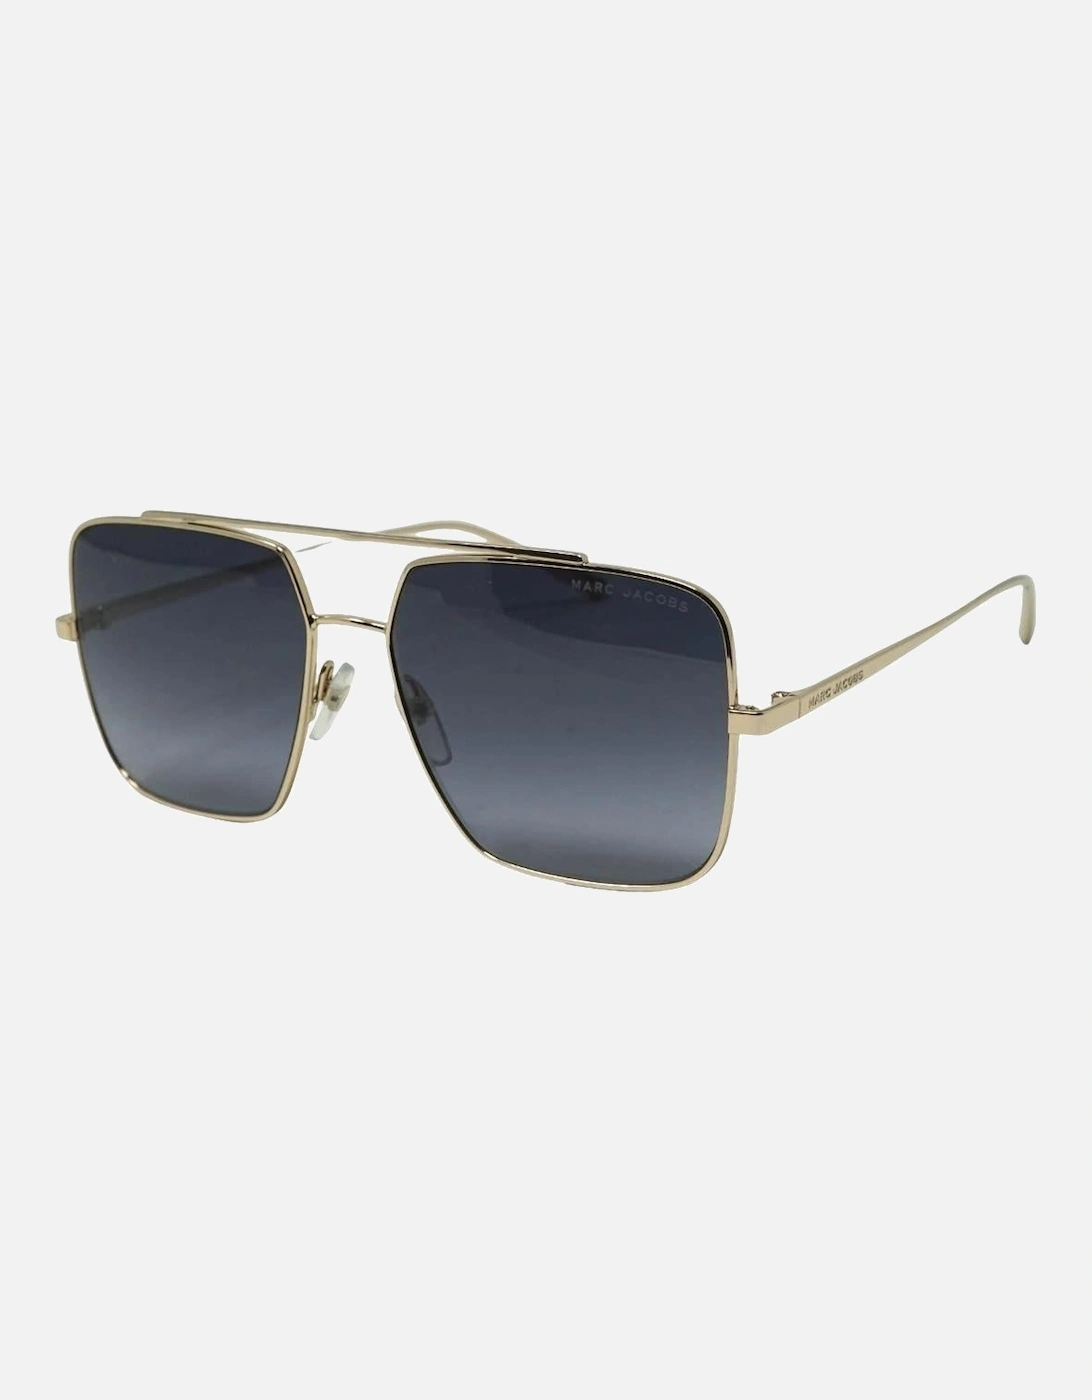 Marc 486 J5G 9O Gold Sunglasses